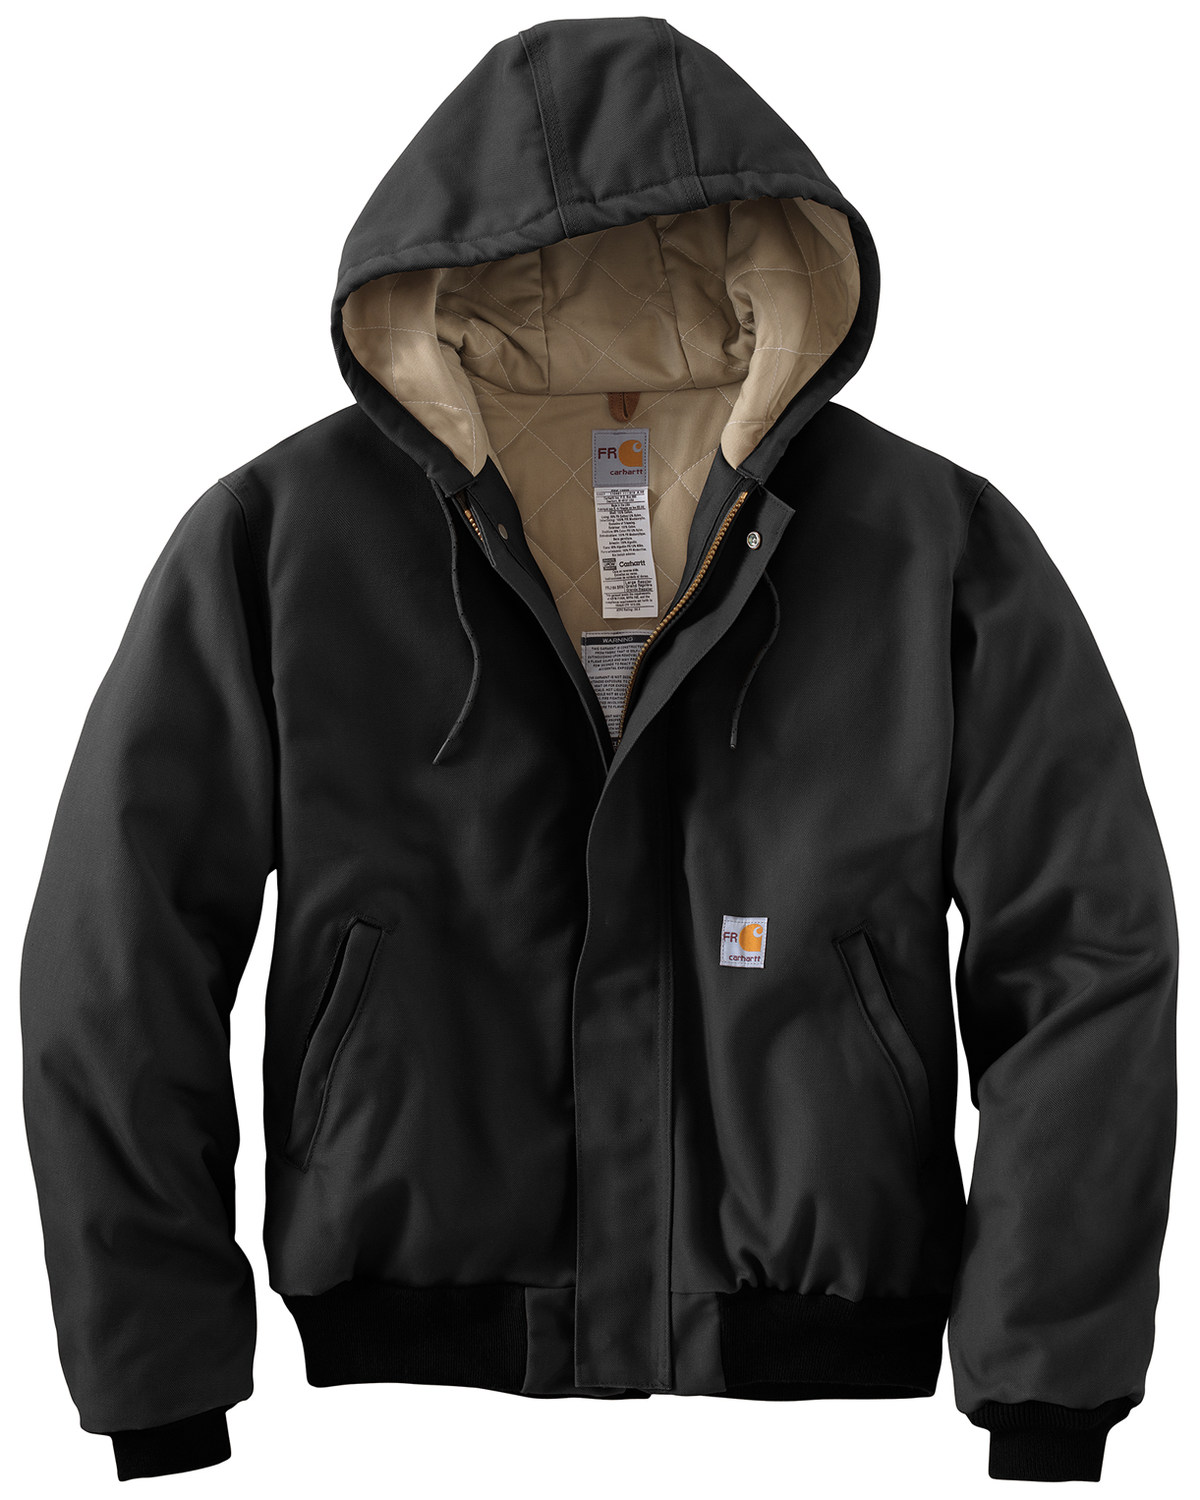 Carhartt Men's FR Duck Active Hooded Jacket - Big & Tall